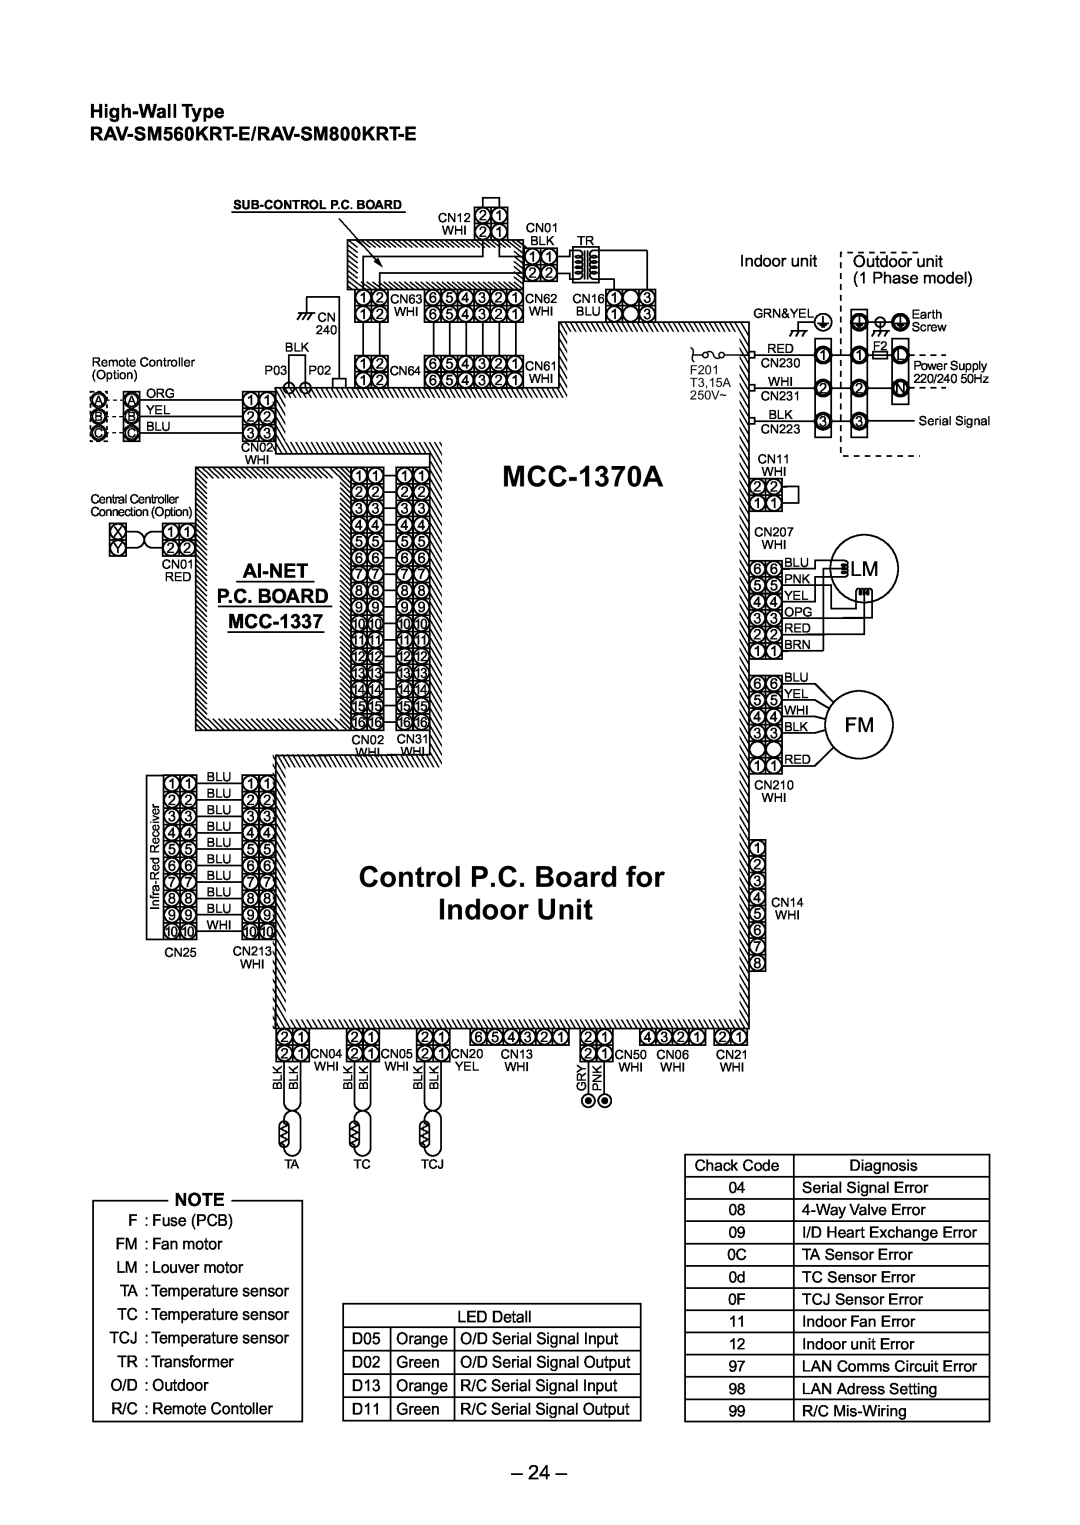 Toshiba RAV-SM800AT-E, RAV-SM800UT-E MCC-1370A, Control P.C. Board for, Indoor Unit, Ai-Net, MCC-1337, Lm Fm, 24 